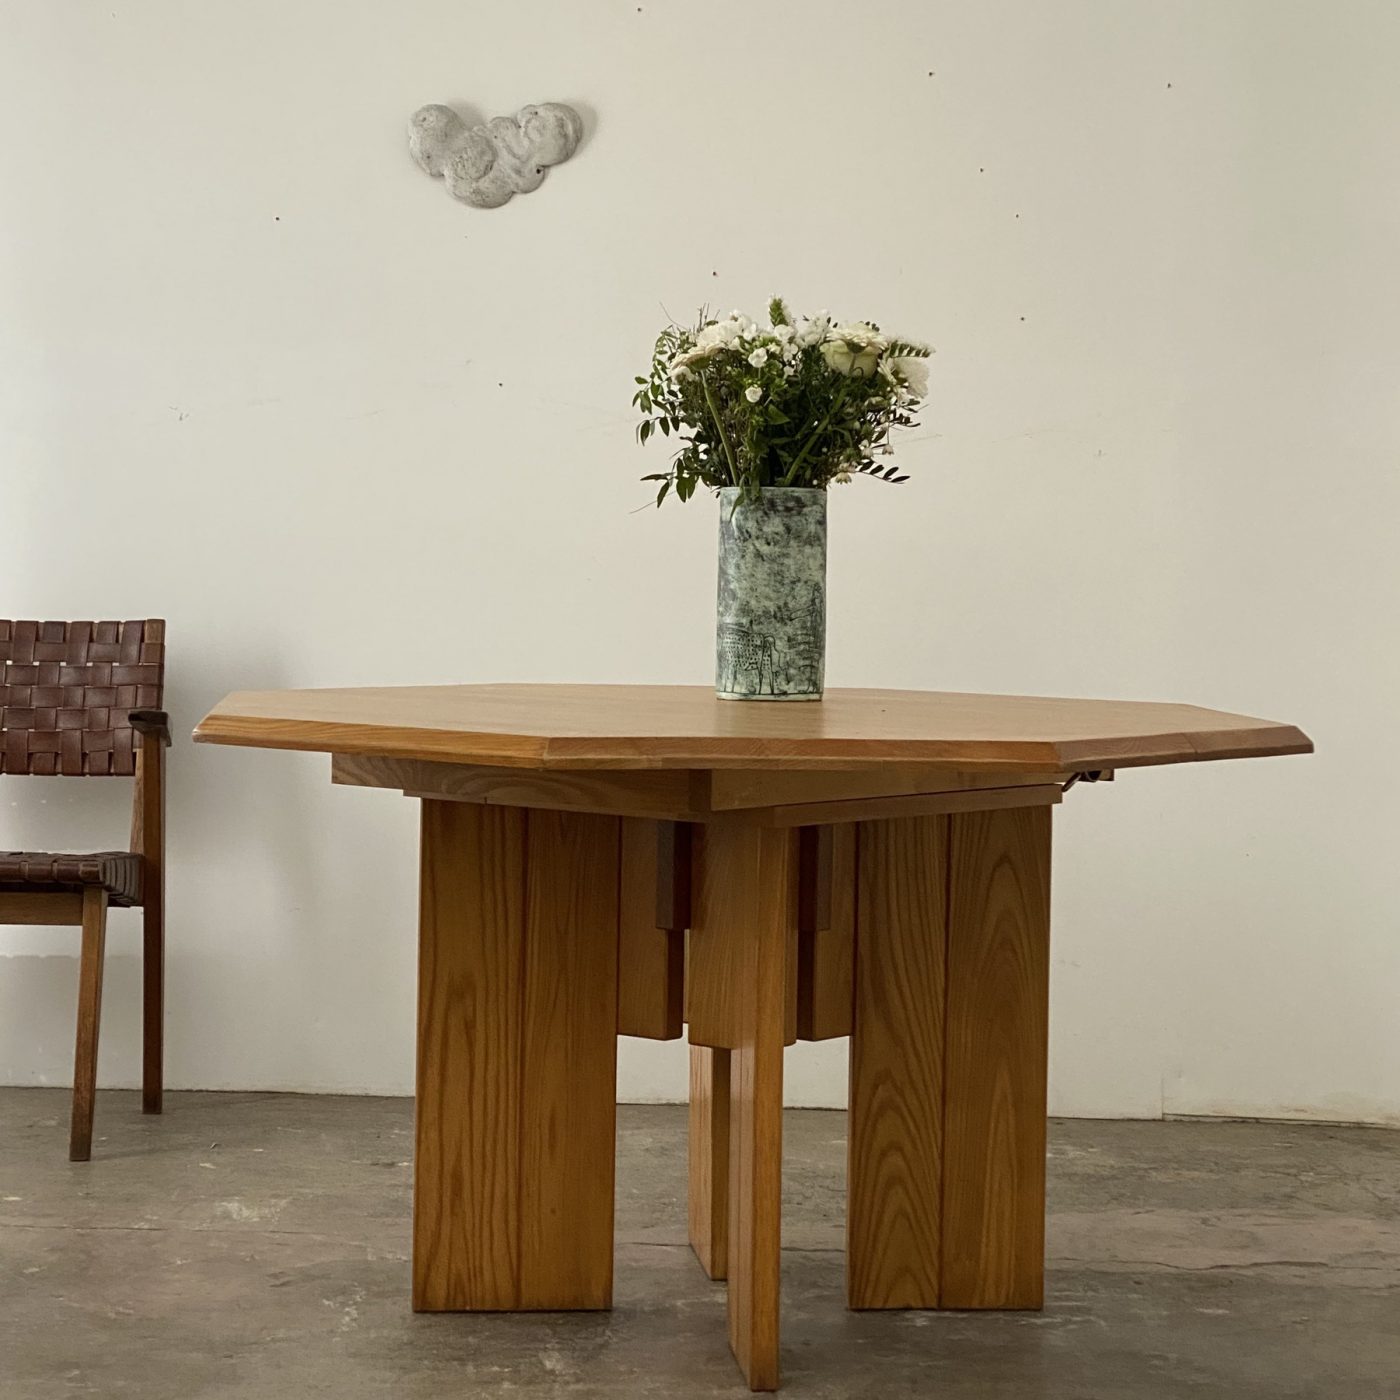 objet-vagabond-elm-wood-table0000